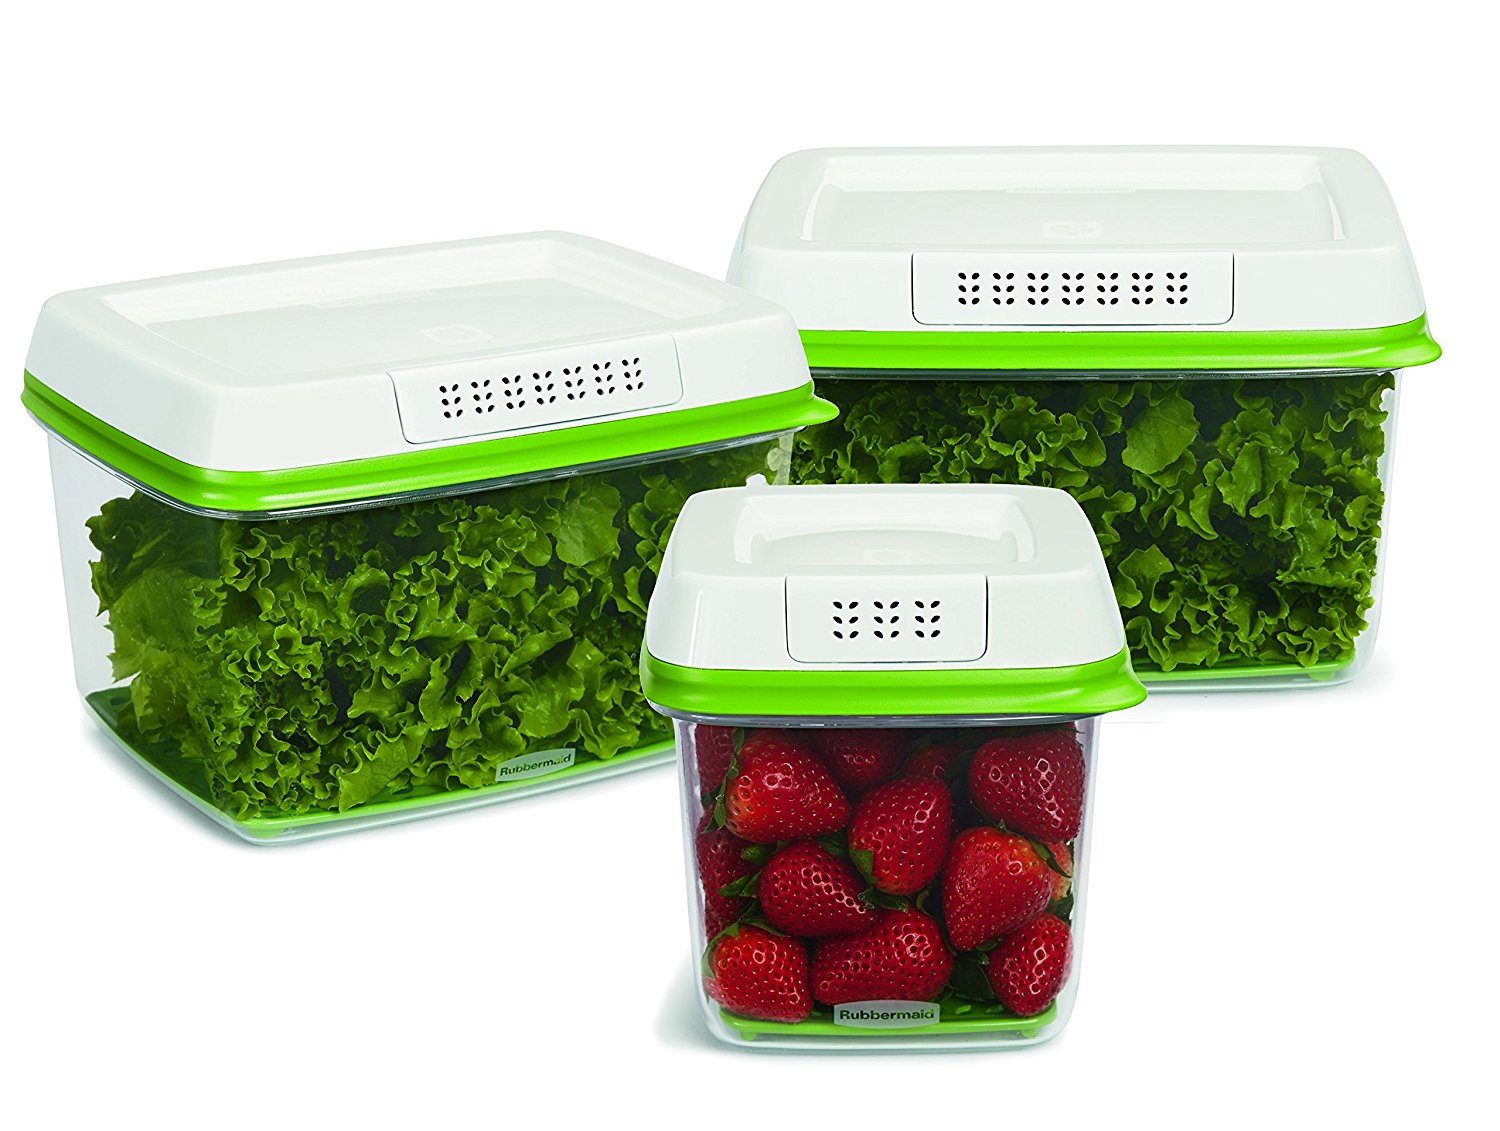 Rubbermaid FreshWorks Produce Saver Food Storage Set – Just $19.98!